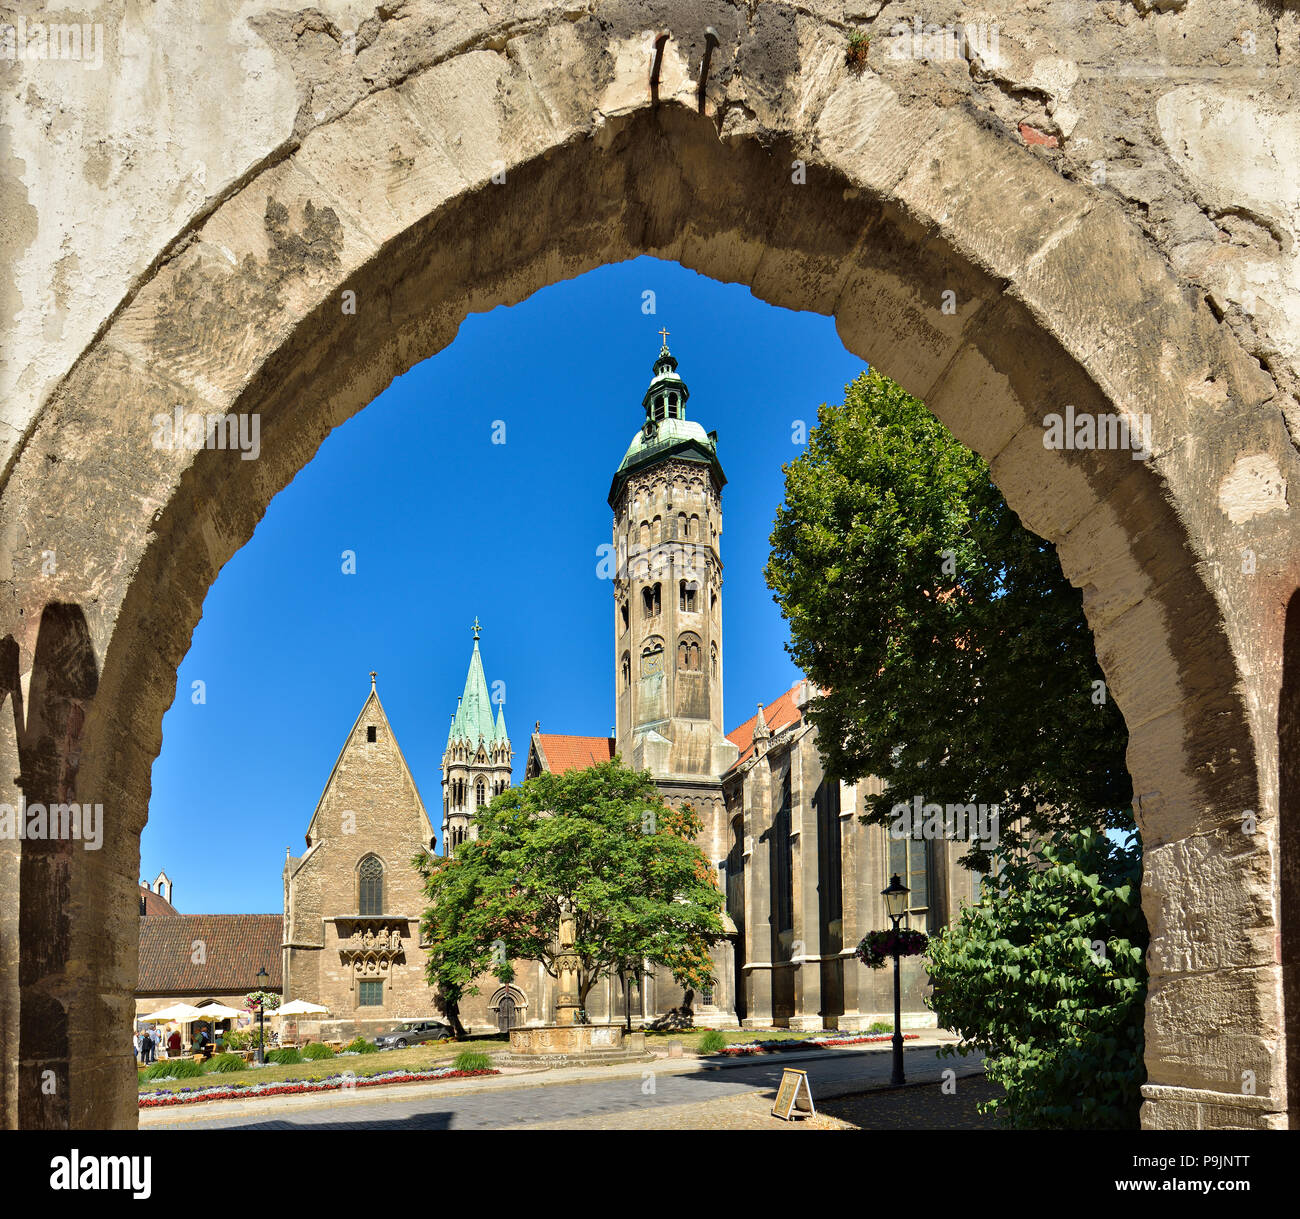 Naumburg Cathedral St. Peter and Paul, archway, Naumburg, Saxony-Anhalt, Germany Stock Photo